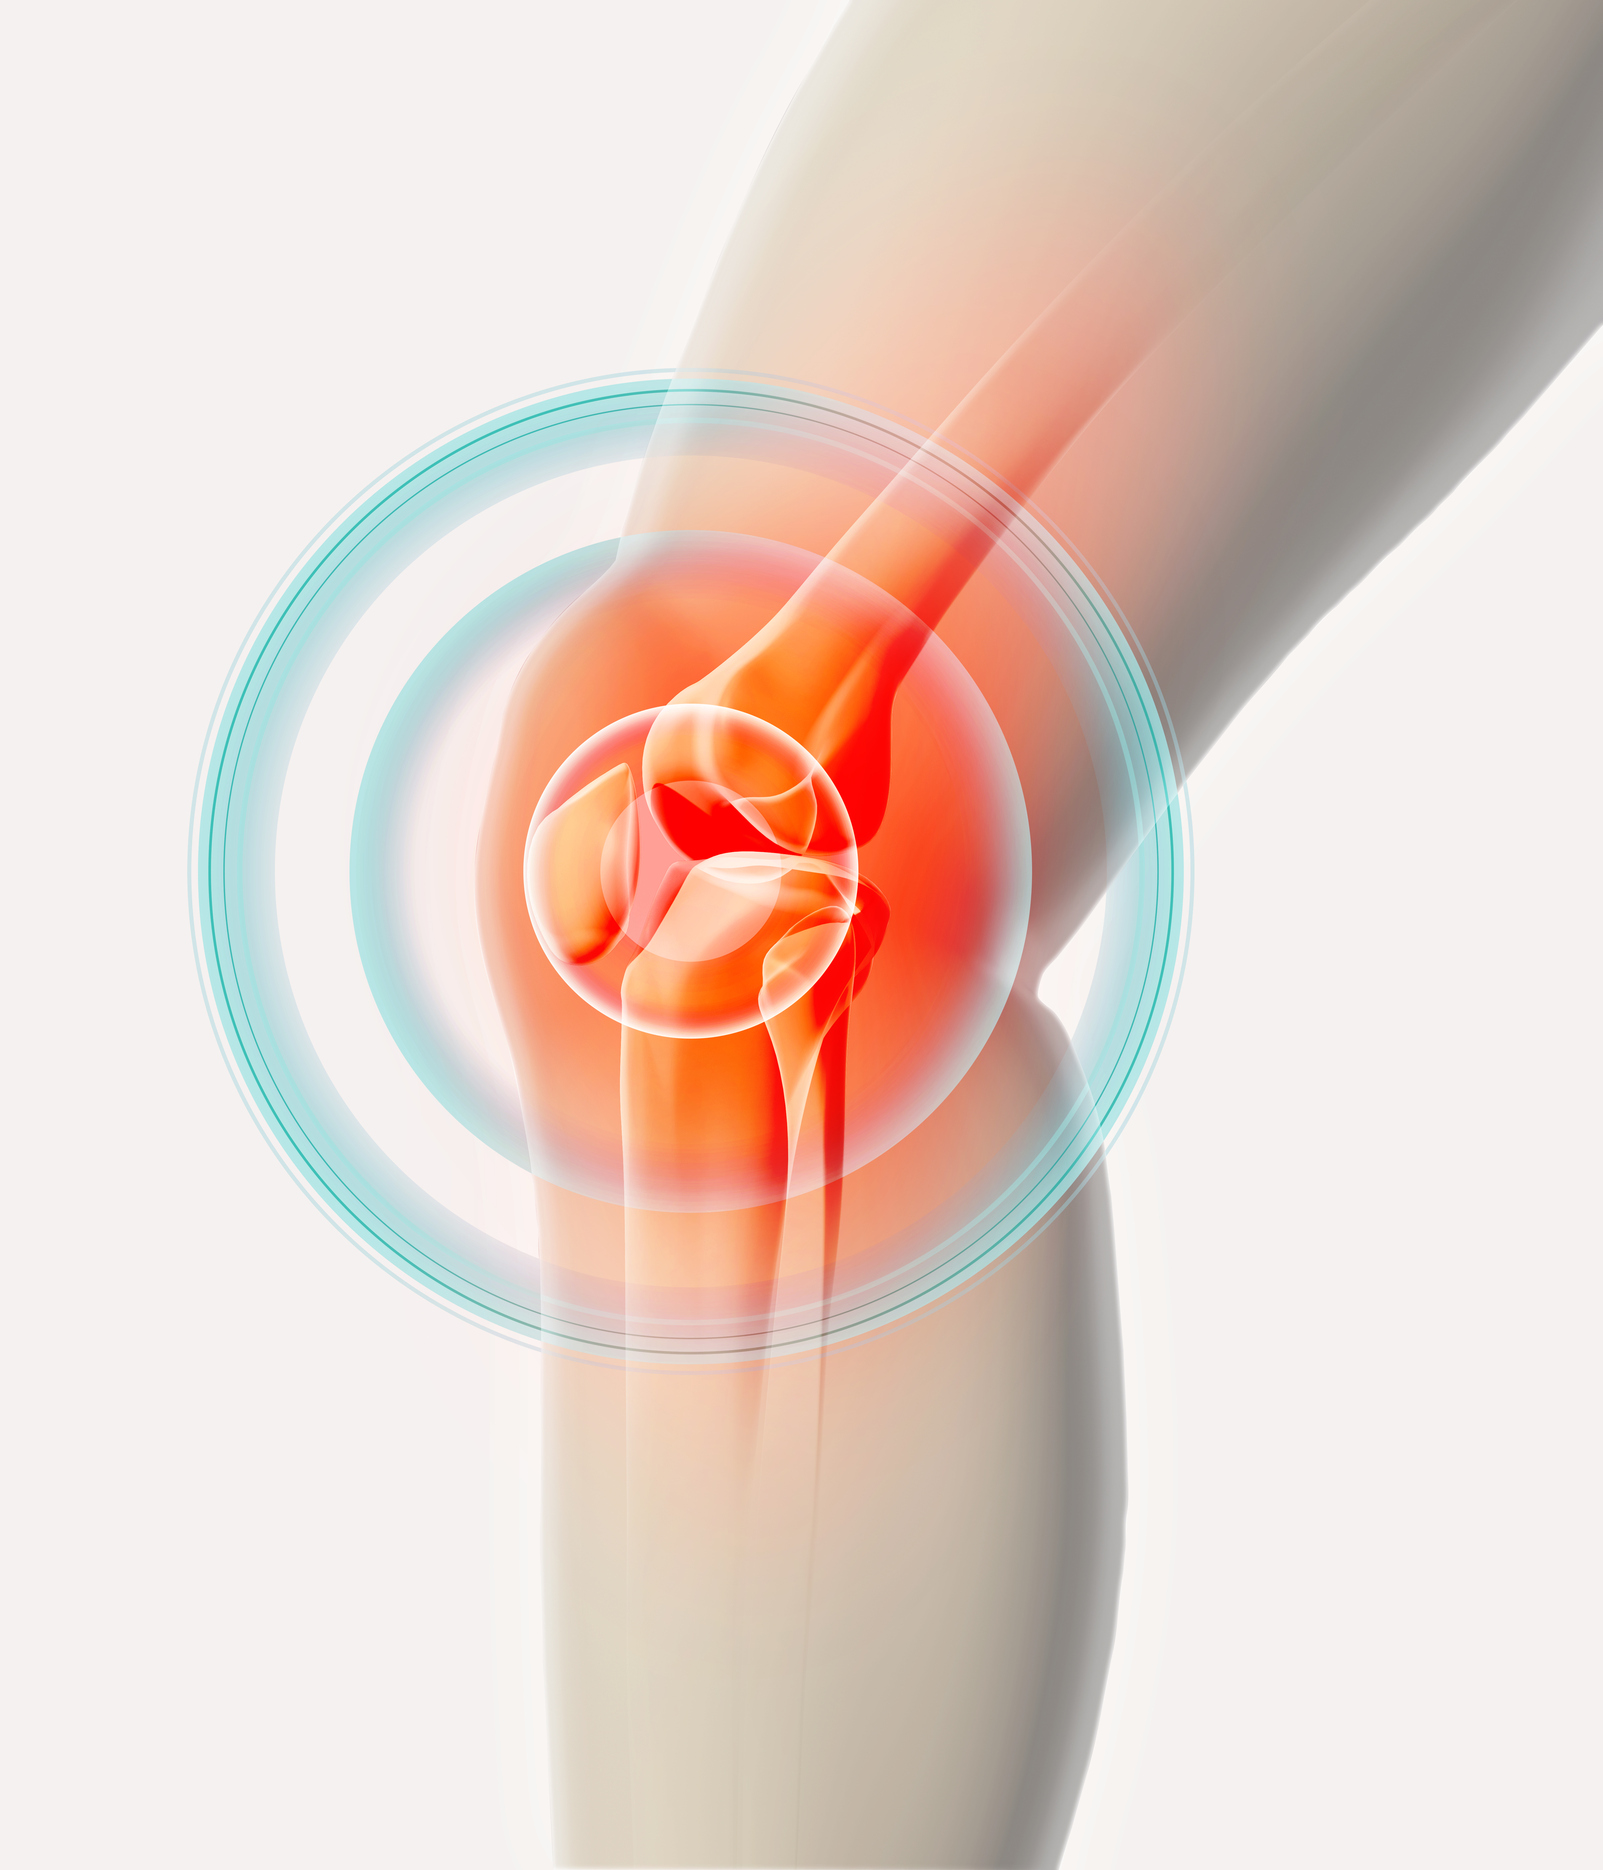 Arthritis & Rheumatic Disease Specialties, osteoarthritis of the knee, Look at Osteoarthritis Photo